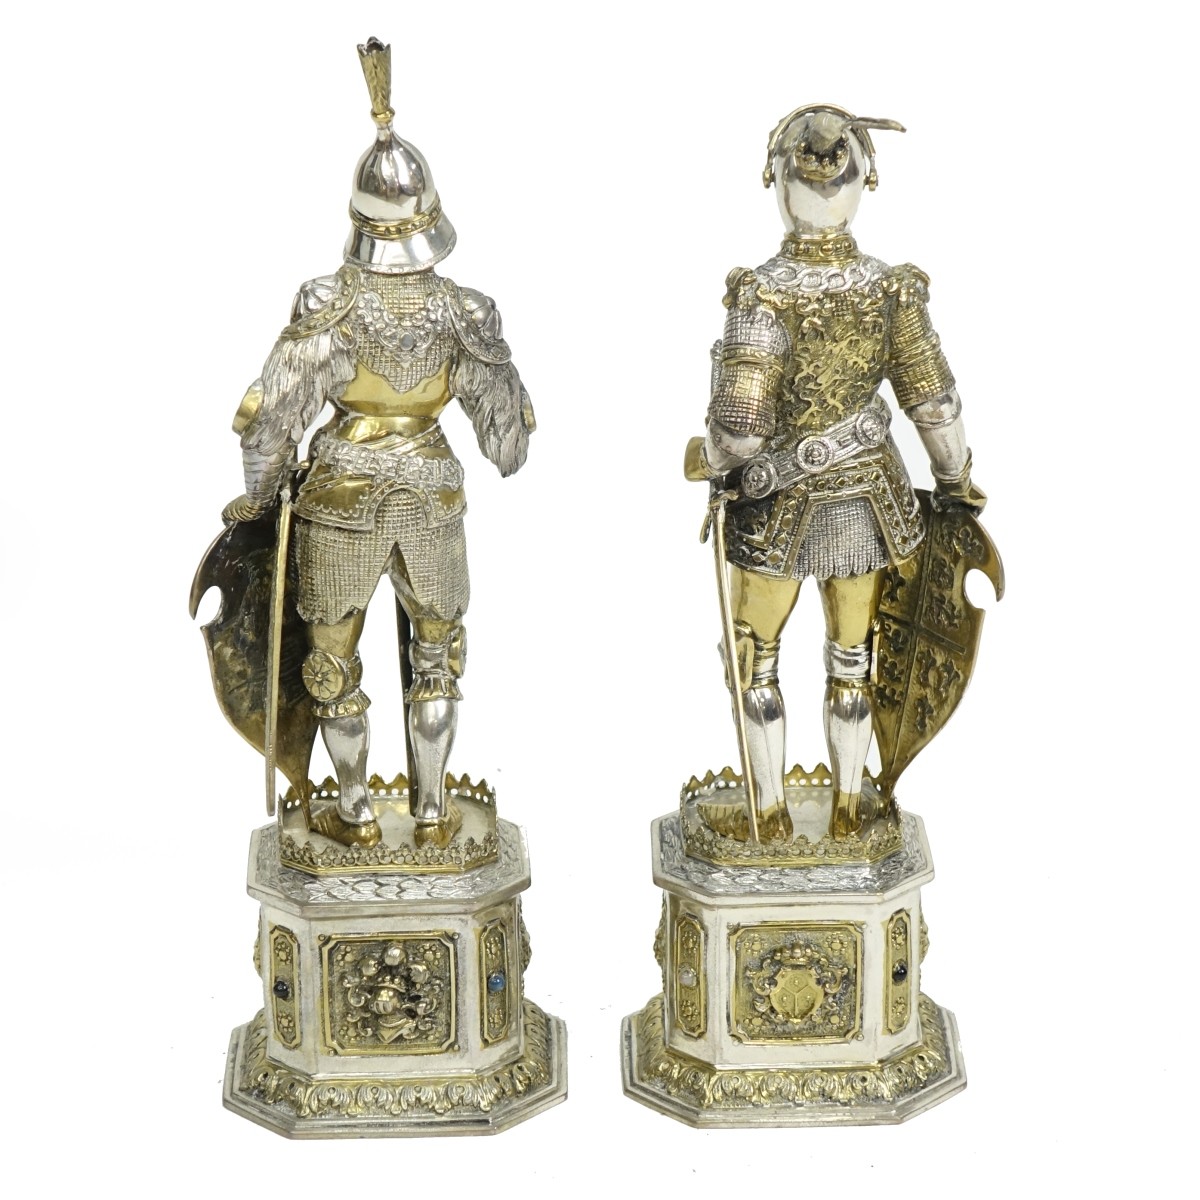 German Silver-Gilt Knights